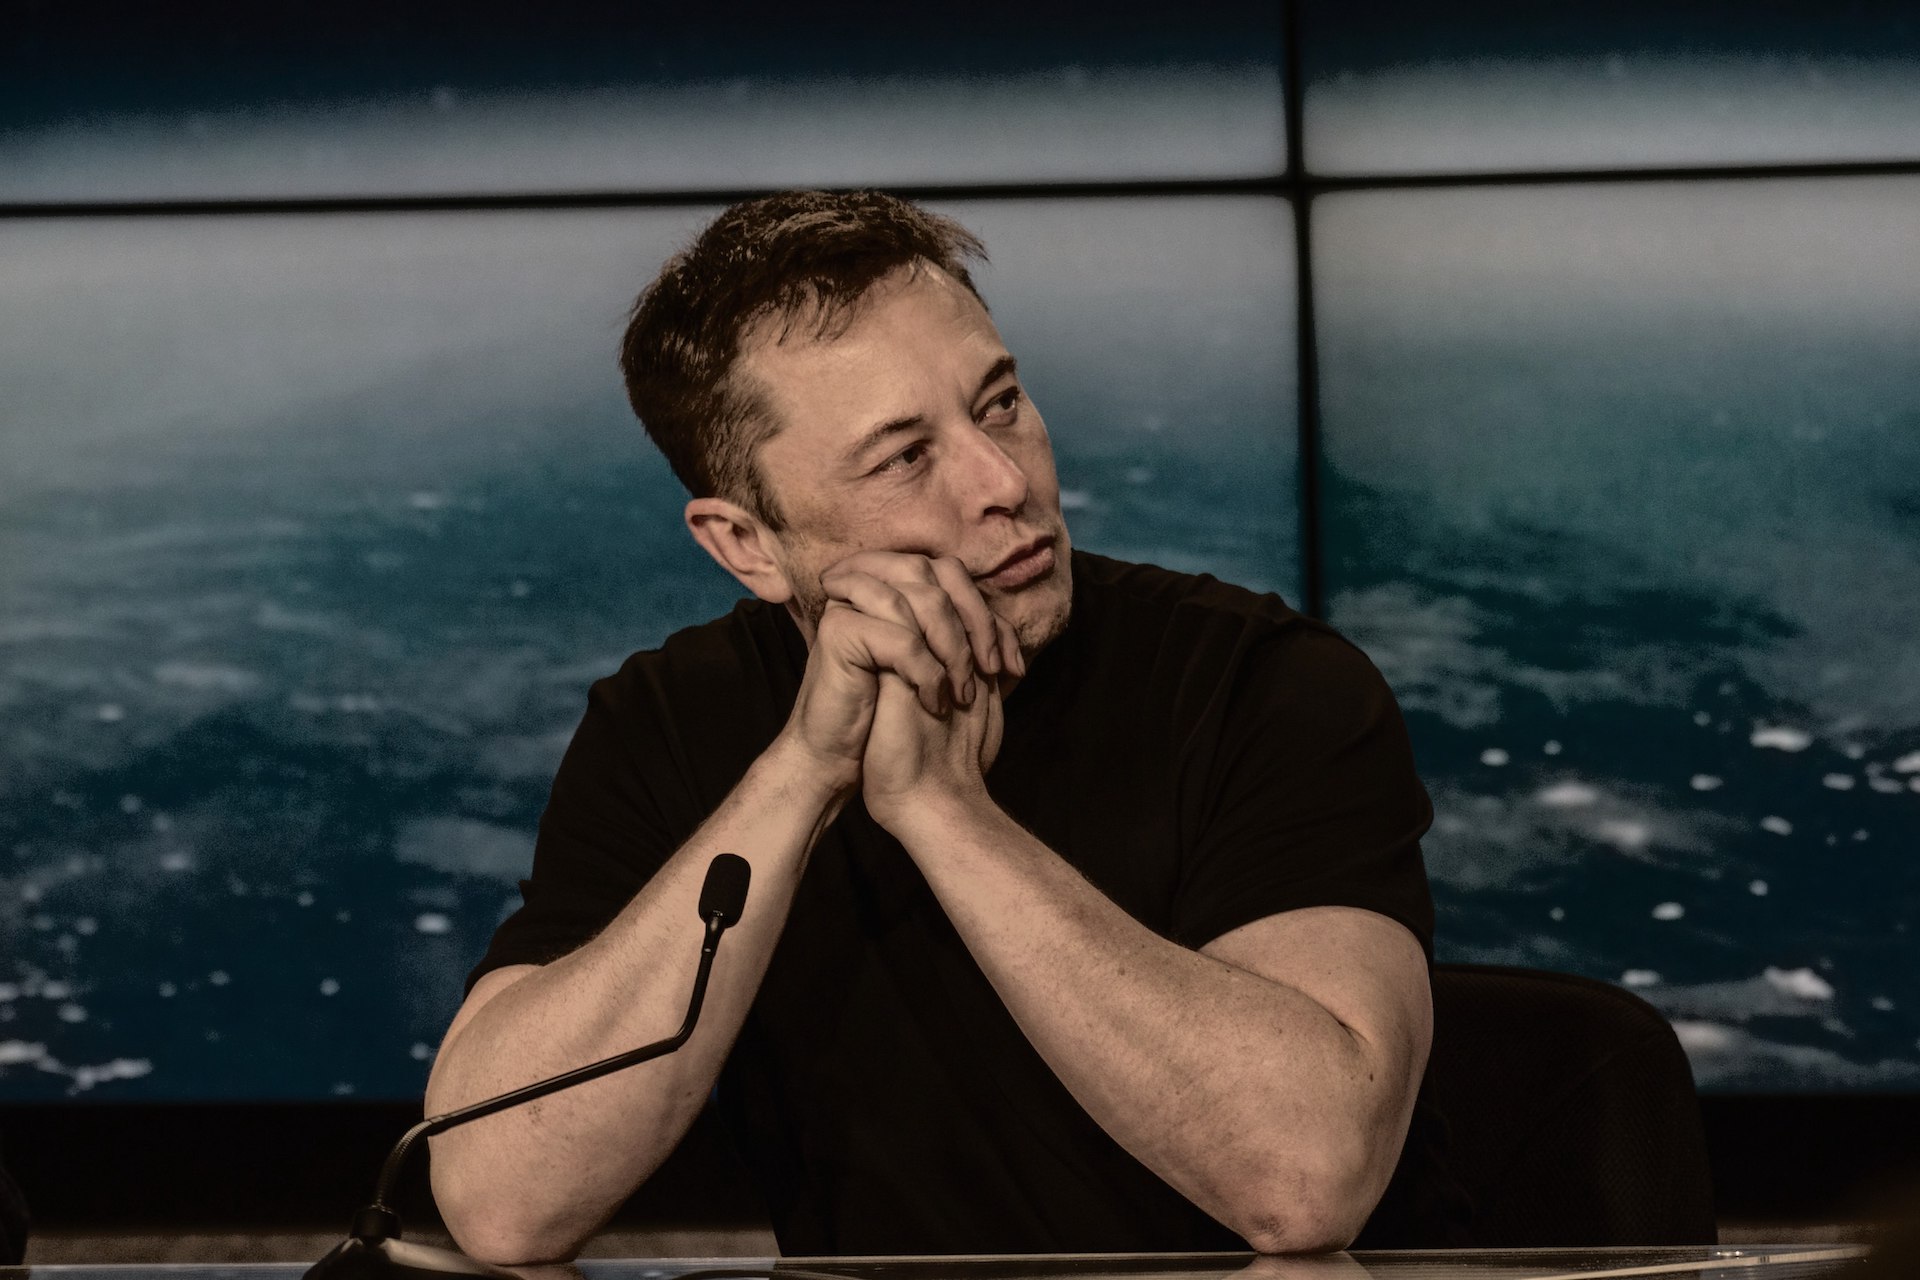 Bild: Daniel Oberhaus, Elon Musk at a Press Conference, CC-BY-SA-4.0, via Wikimedia Commons (Bildgröße verändert)